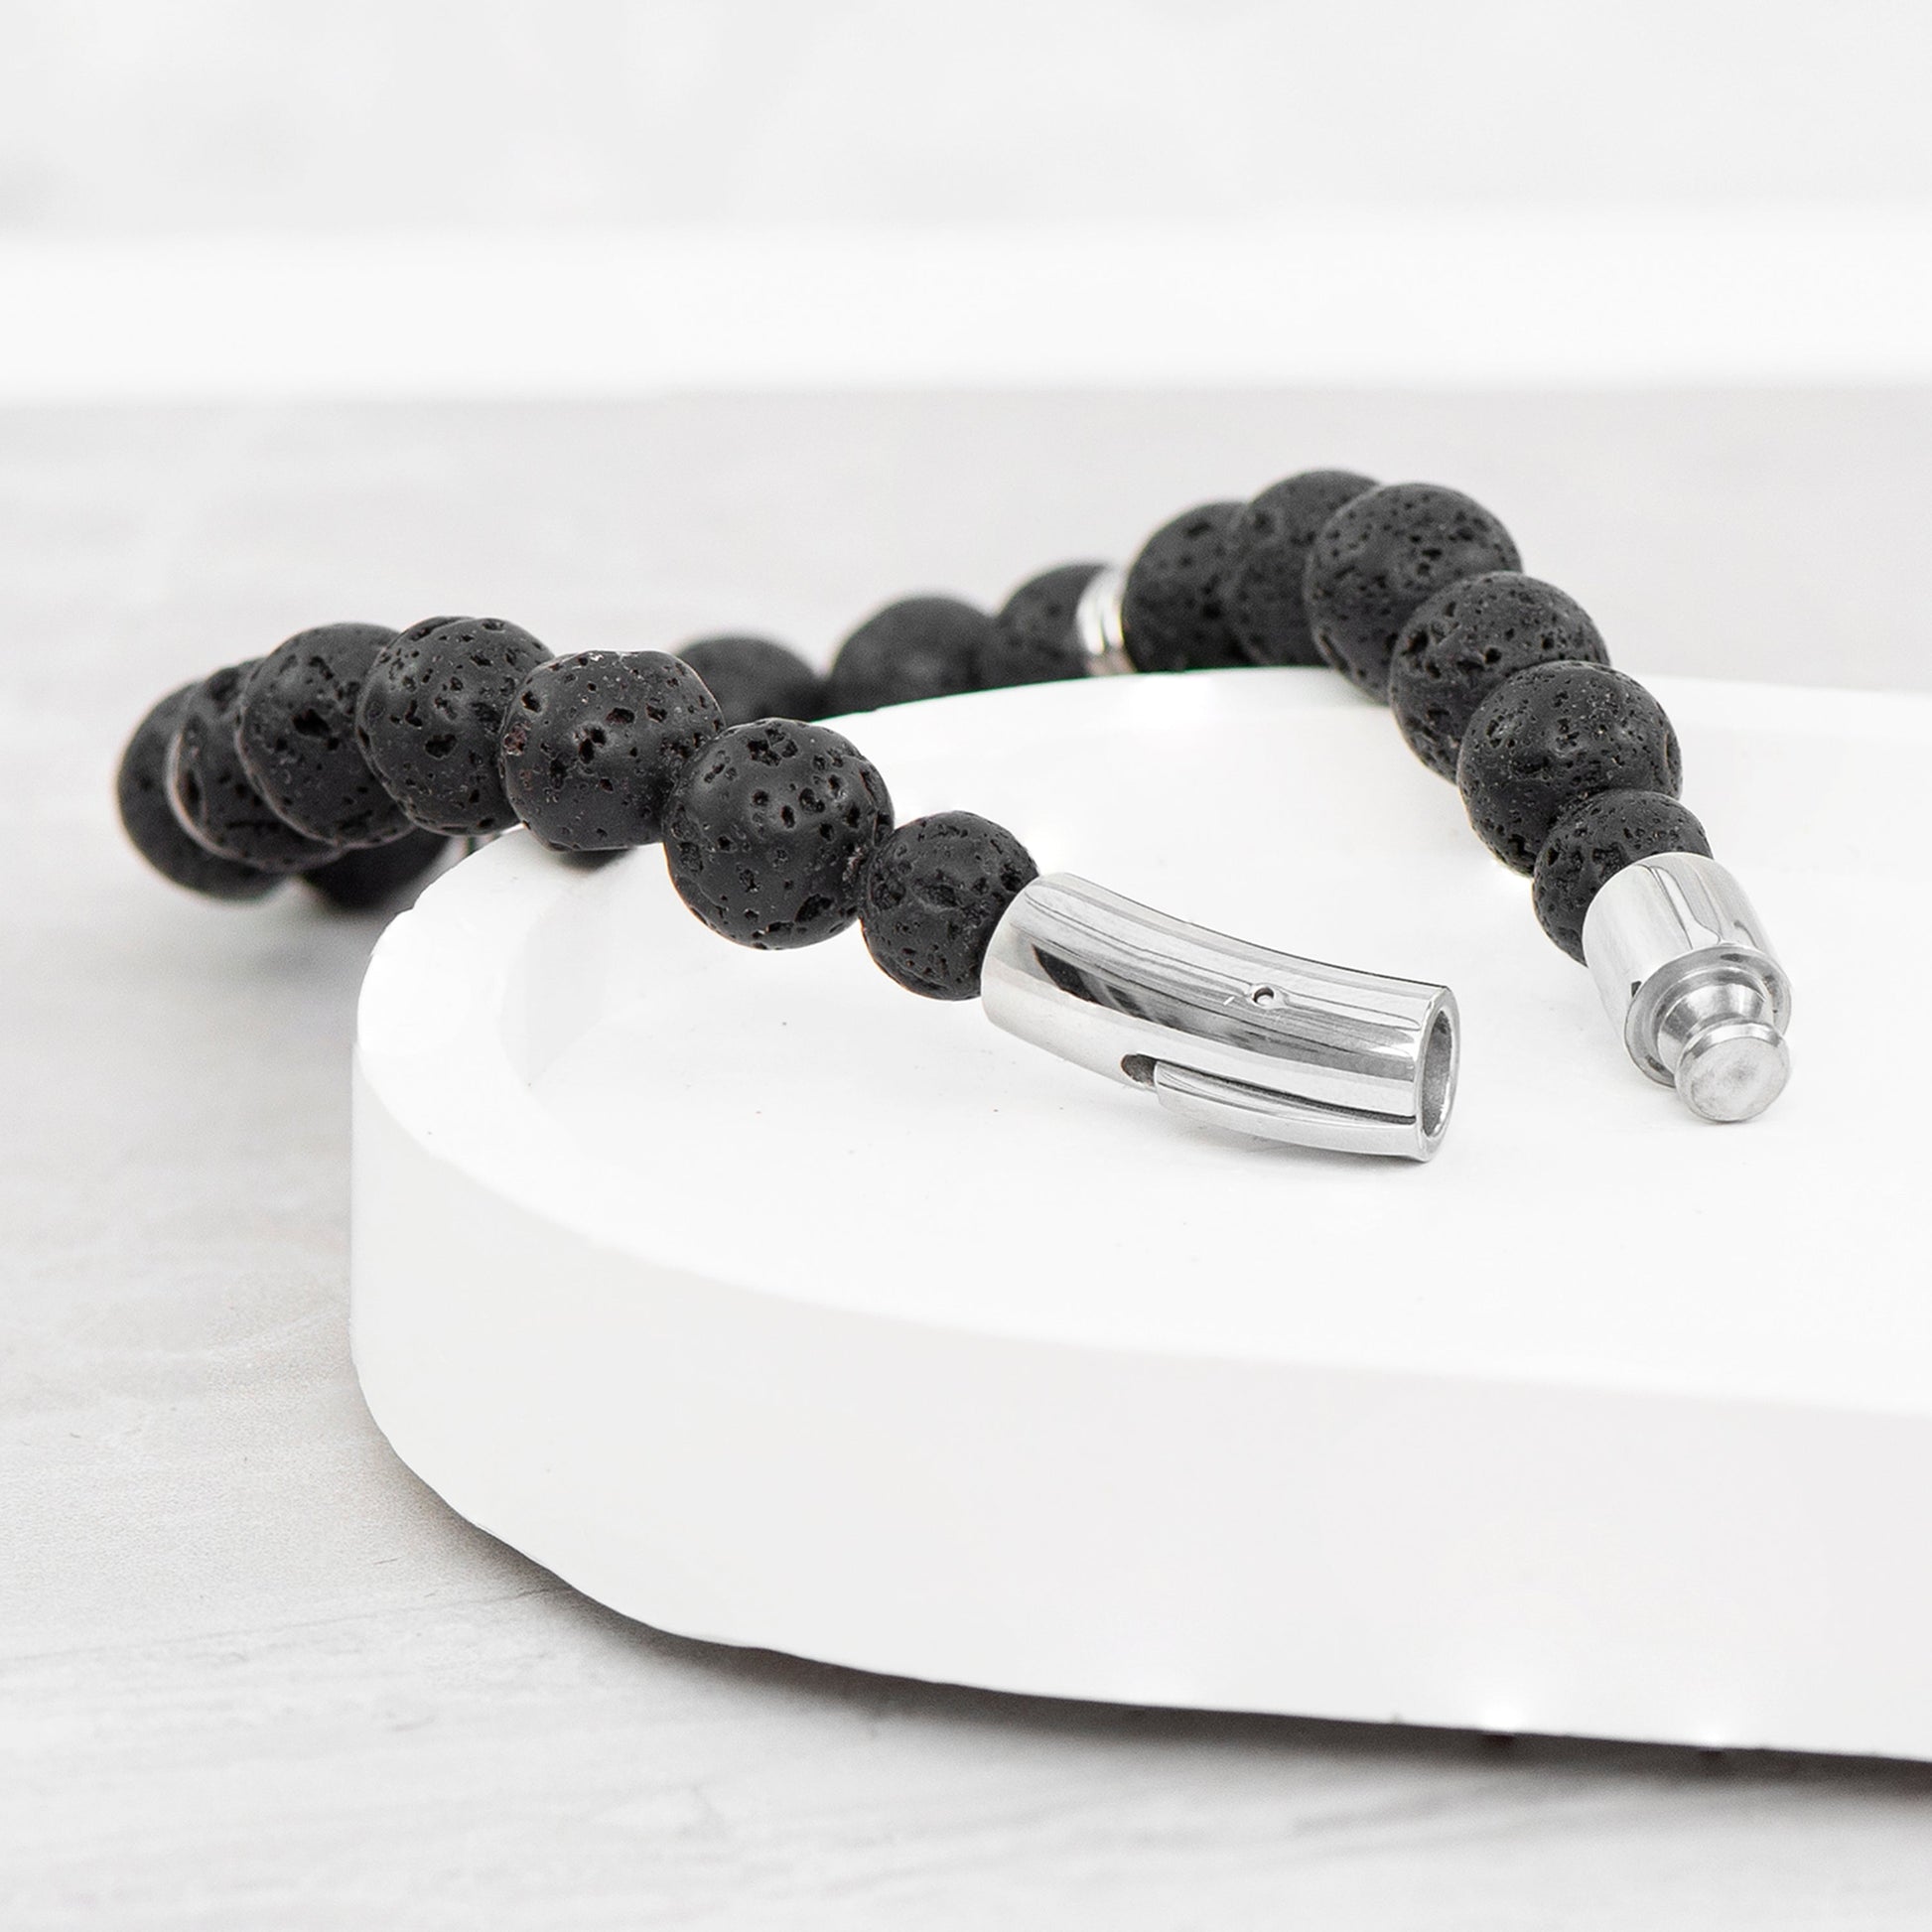 Personalized Men's Bracelets - Personalized Men's Silver Lion Black Beaded Bracelet 